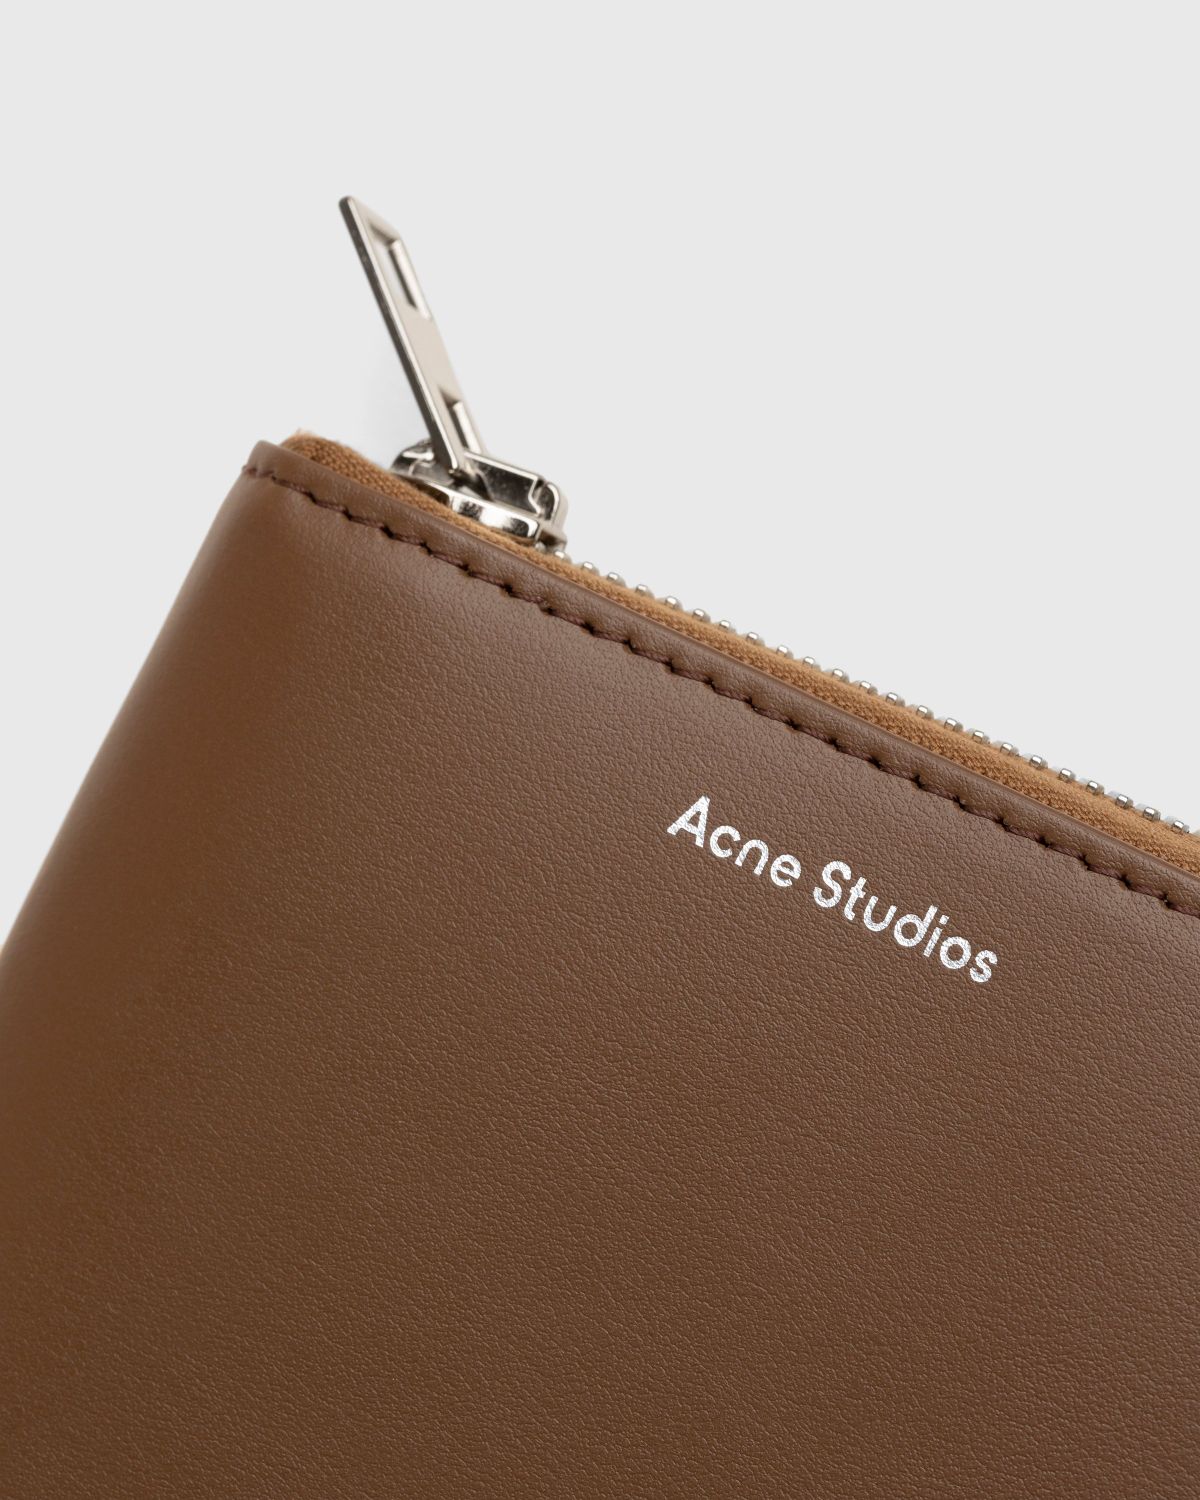 Acne Studios – Leather Zip Wallet Brown - Wallets - Brown - Image 3